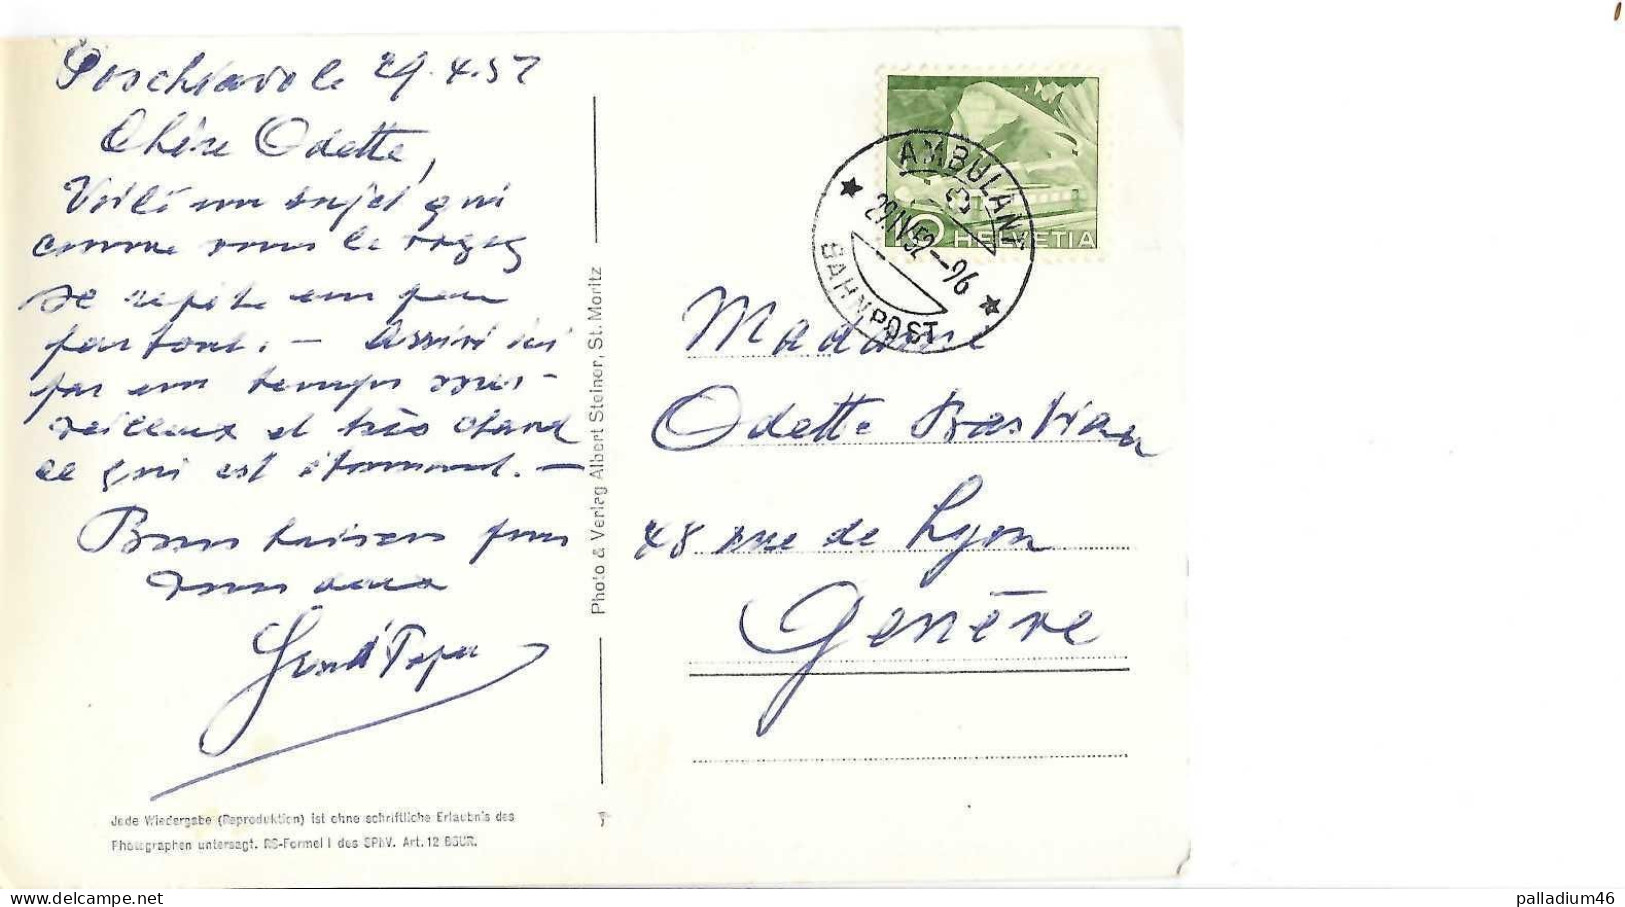 GR POSCHIAVO - Photo Albert Steiner St. Moritz No 5991 - Circulé Le 29.04.1952 - Poschiavo